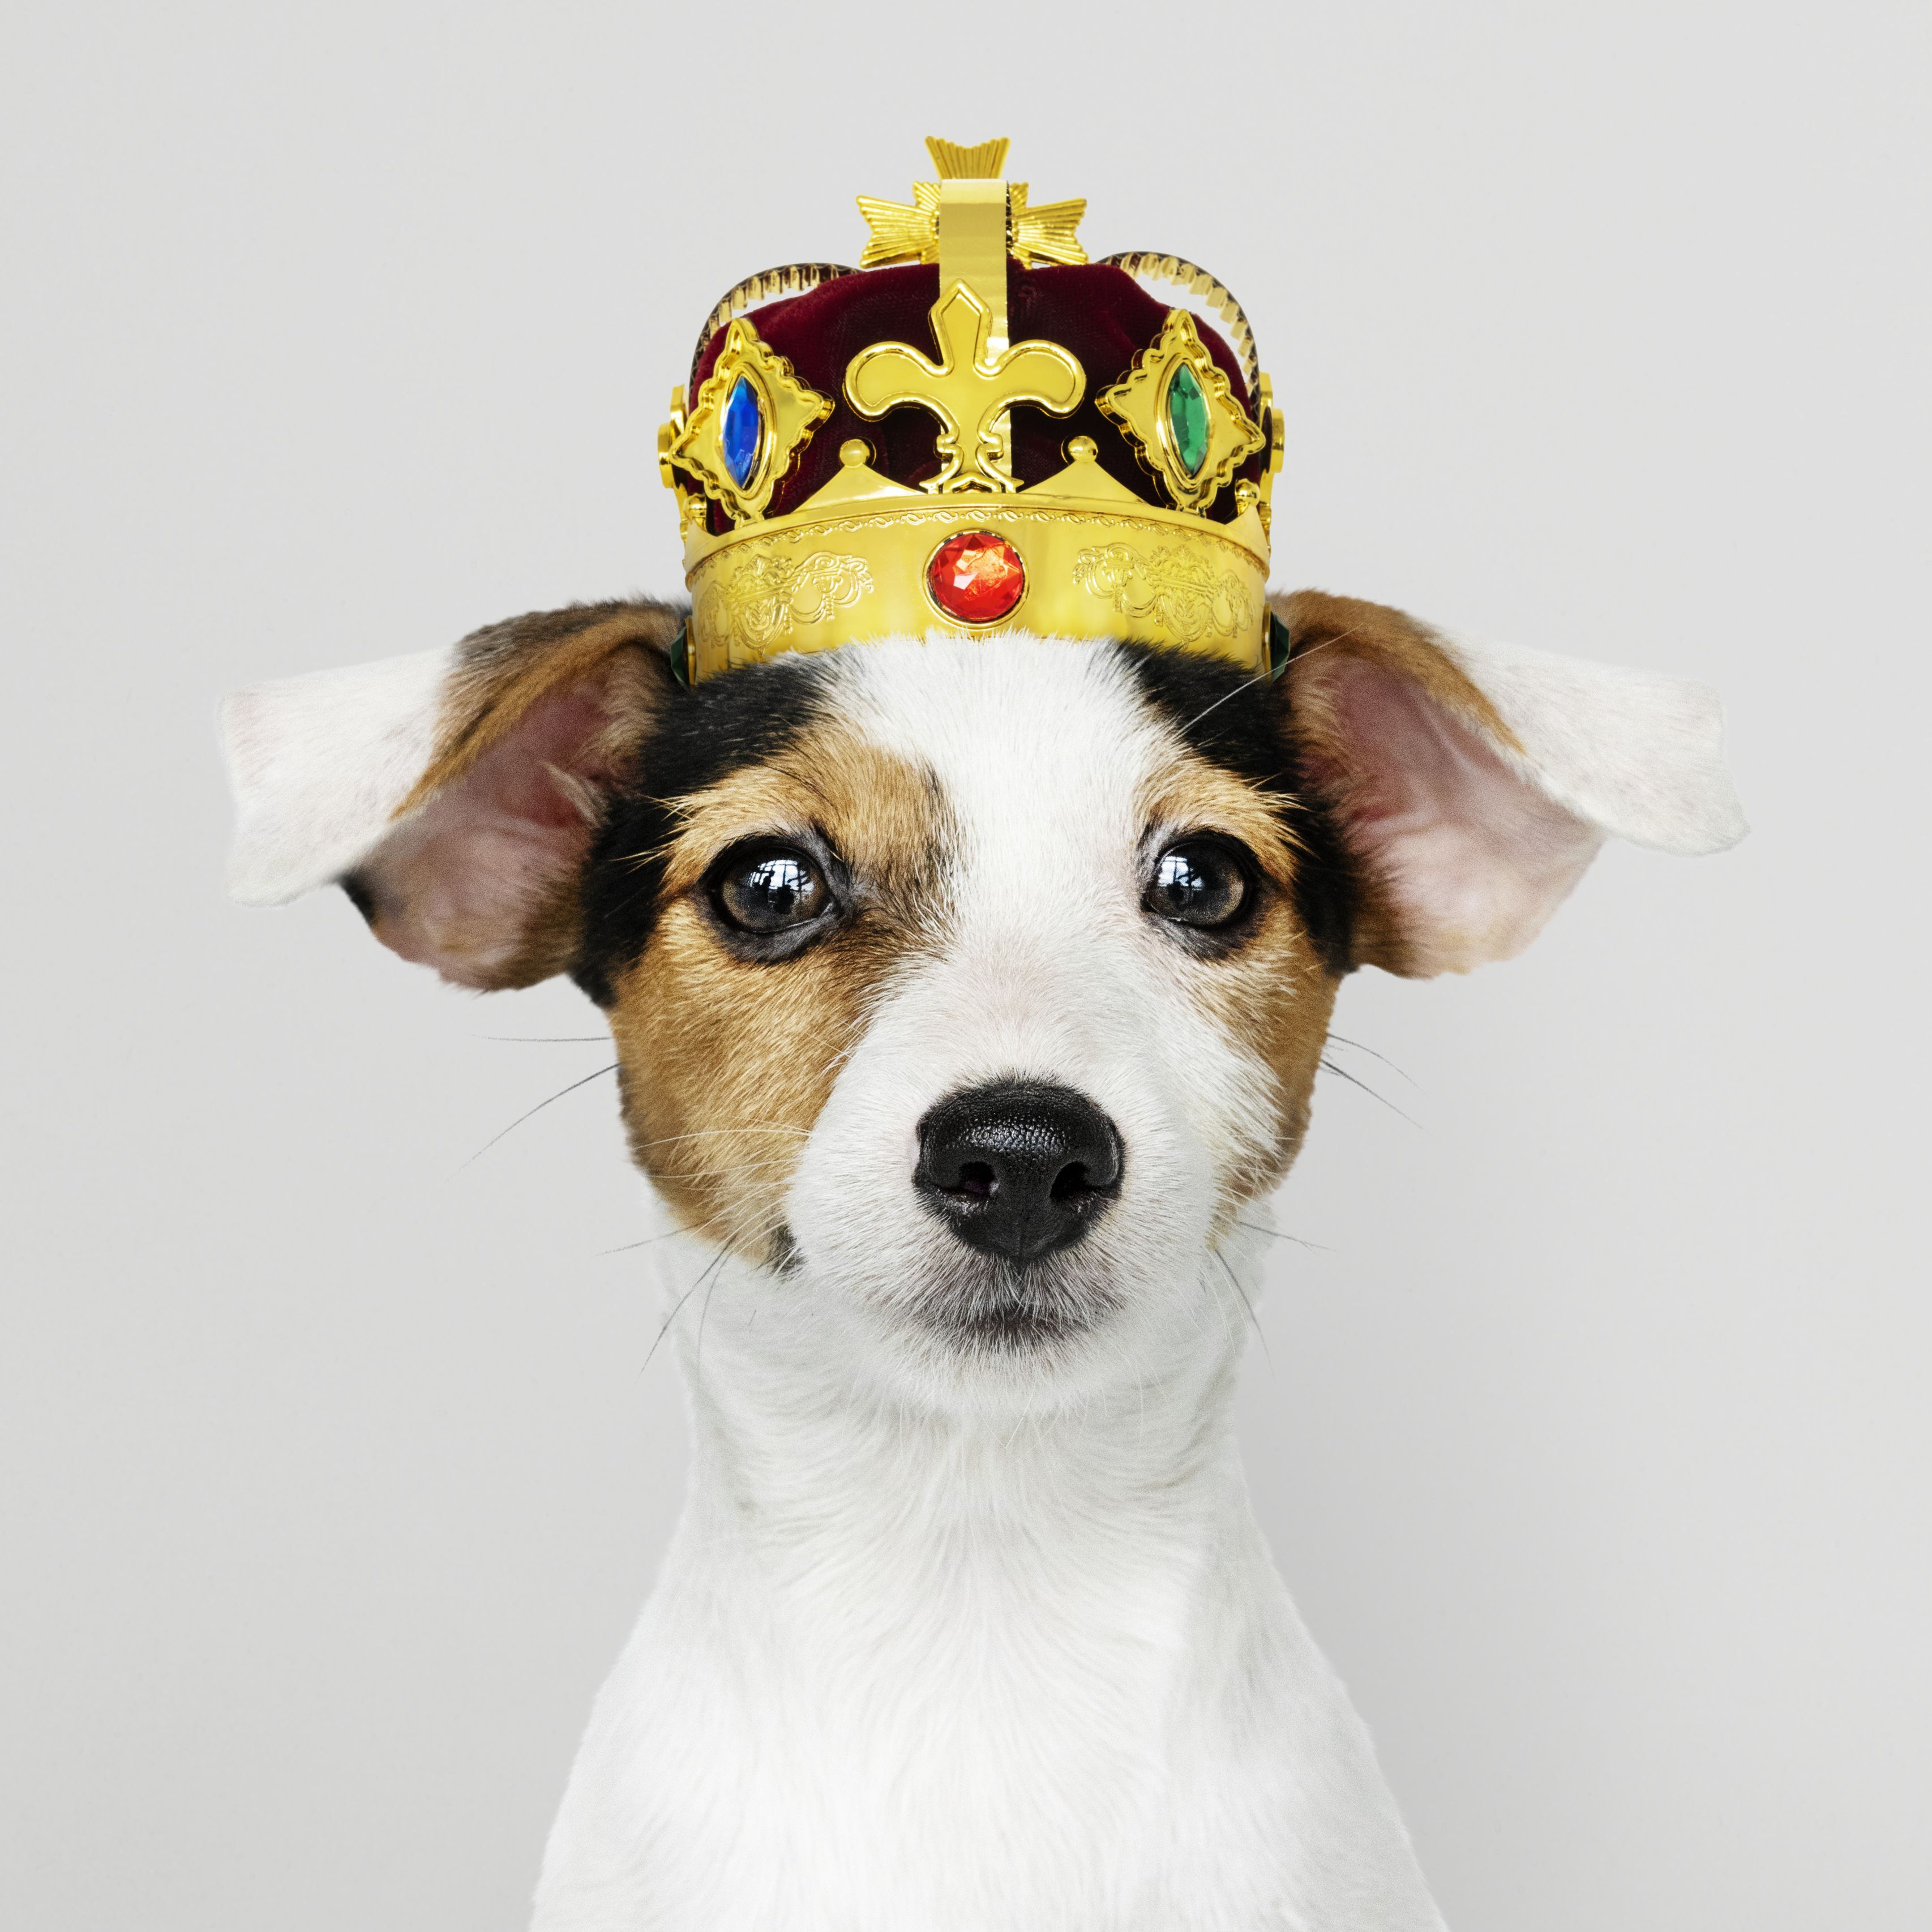 Jack Russel Wearing a crown